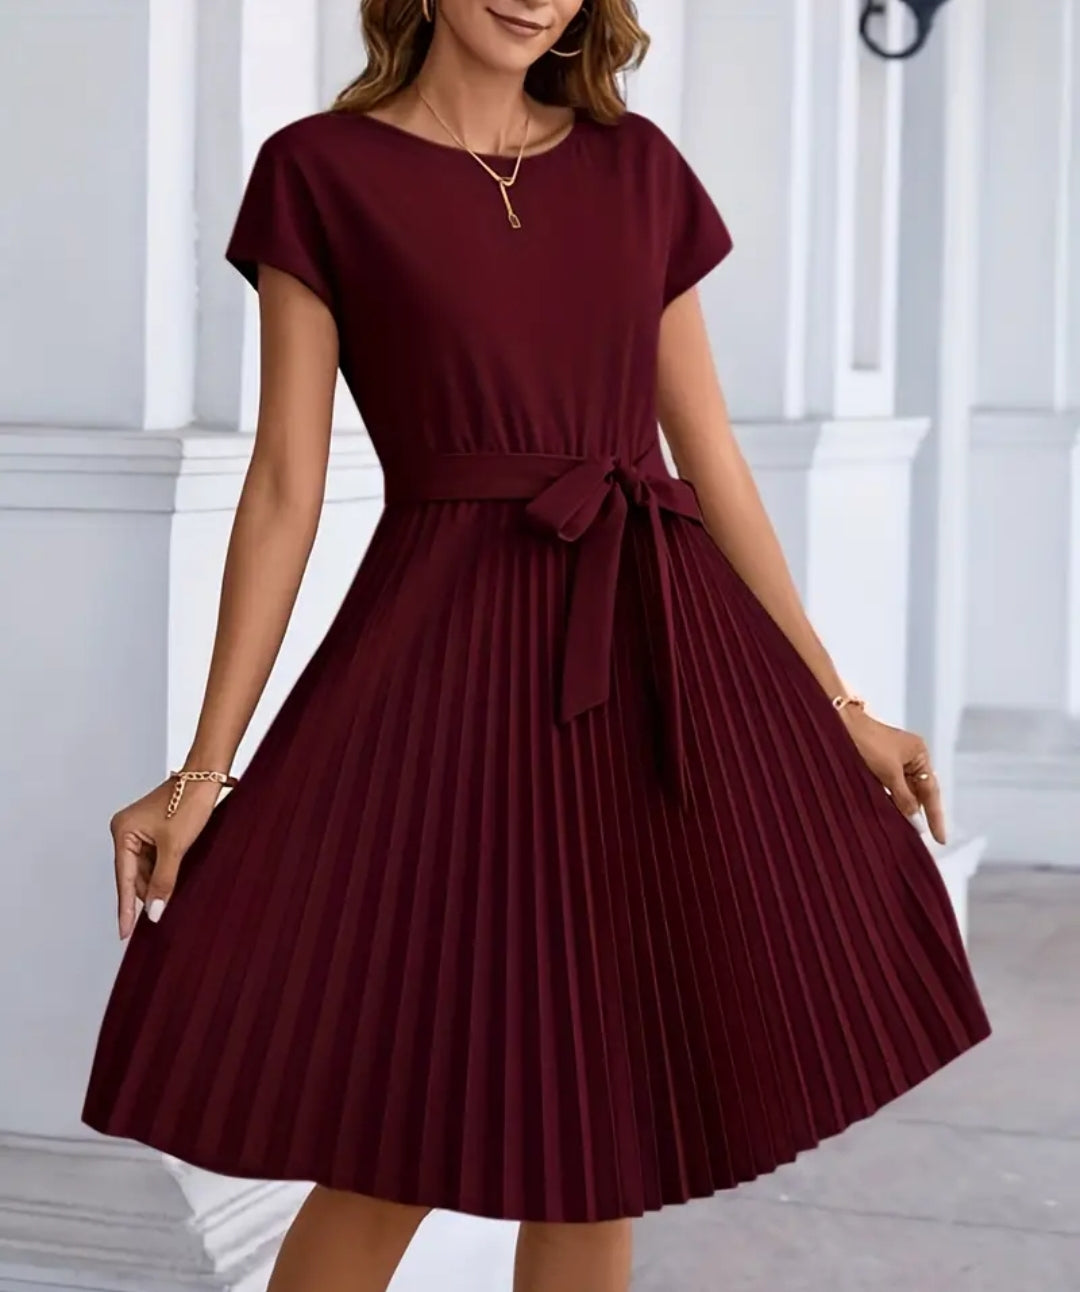 Burgundy Pleated Dress with Sash